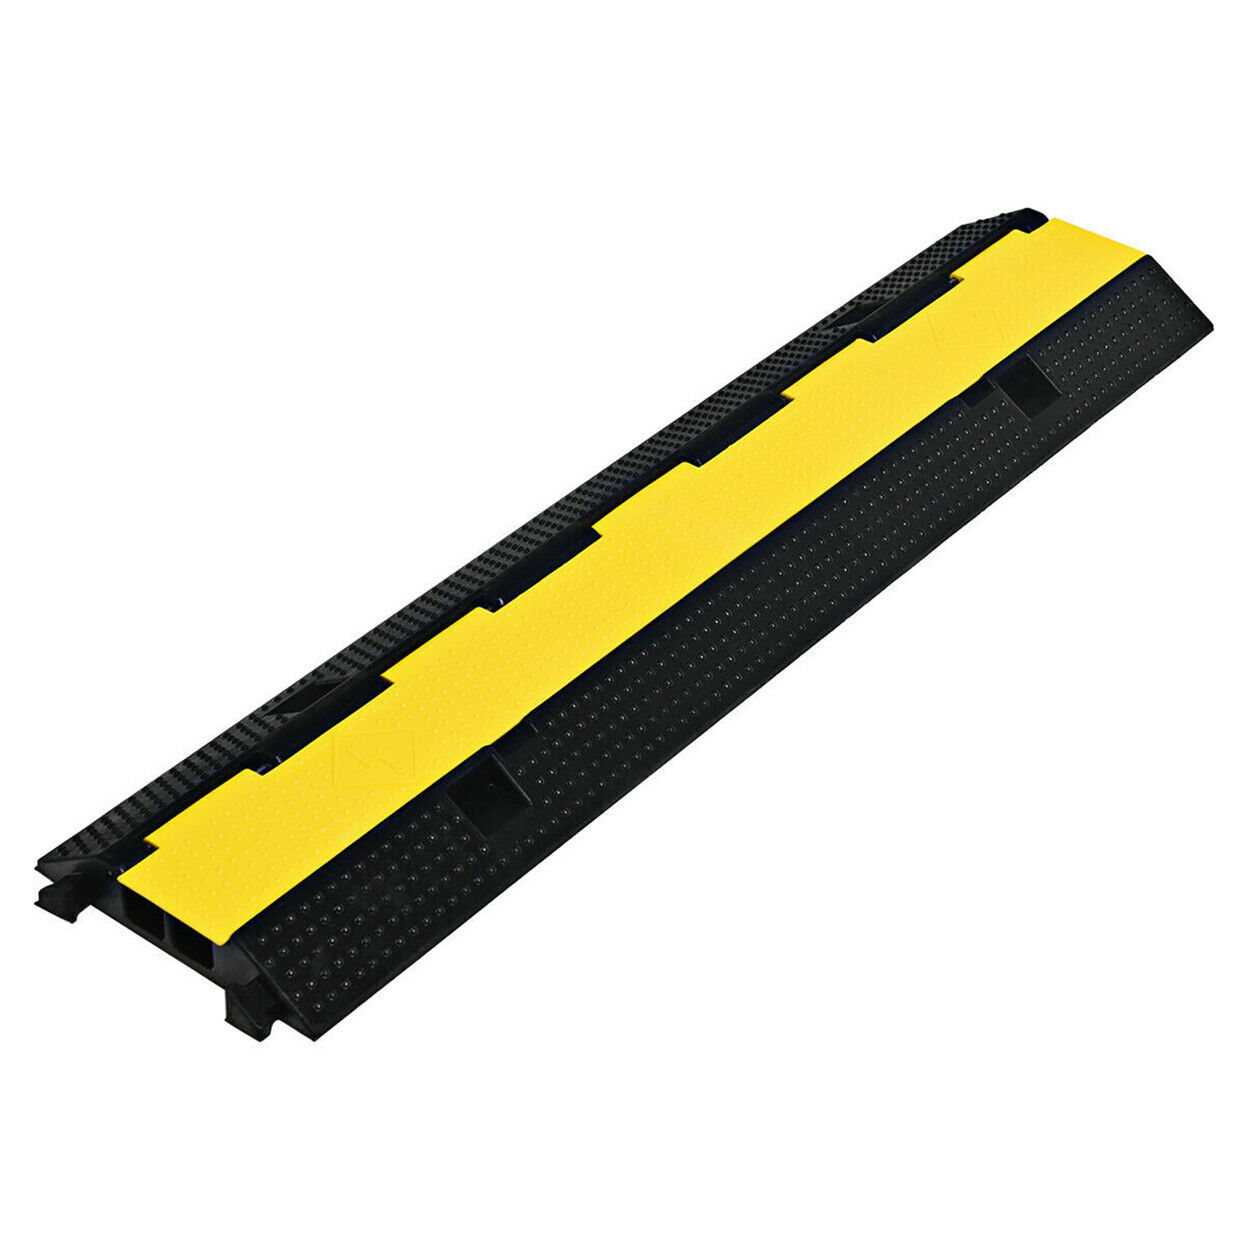 Costway 2 Channel Rubber Floor Cable Protectors Traffic Speed Bump W/flip-open